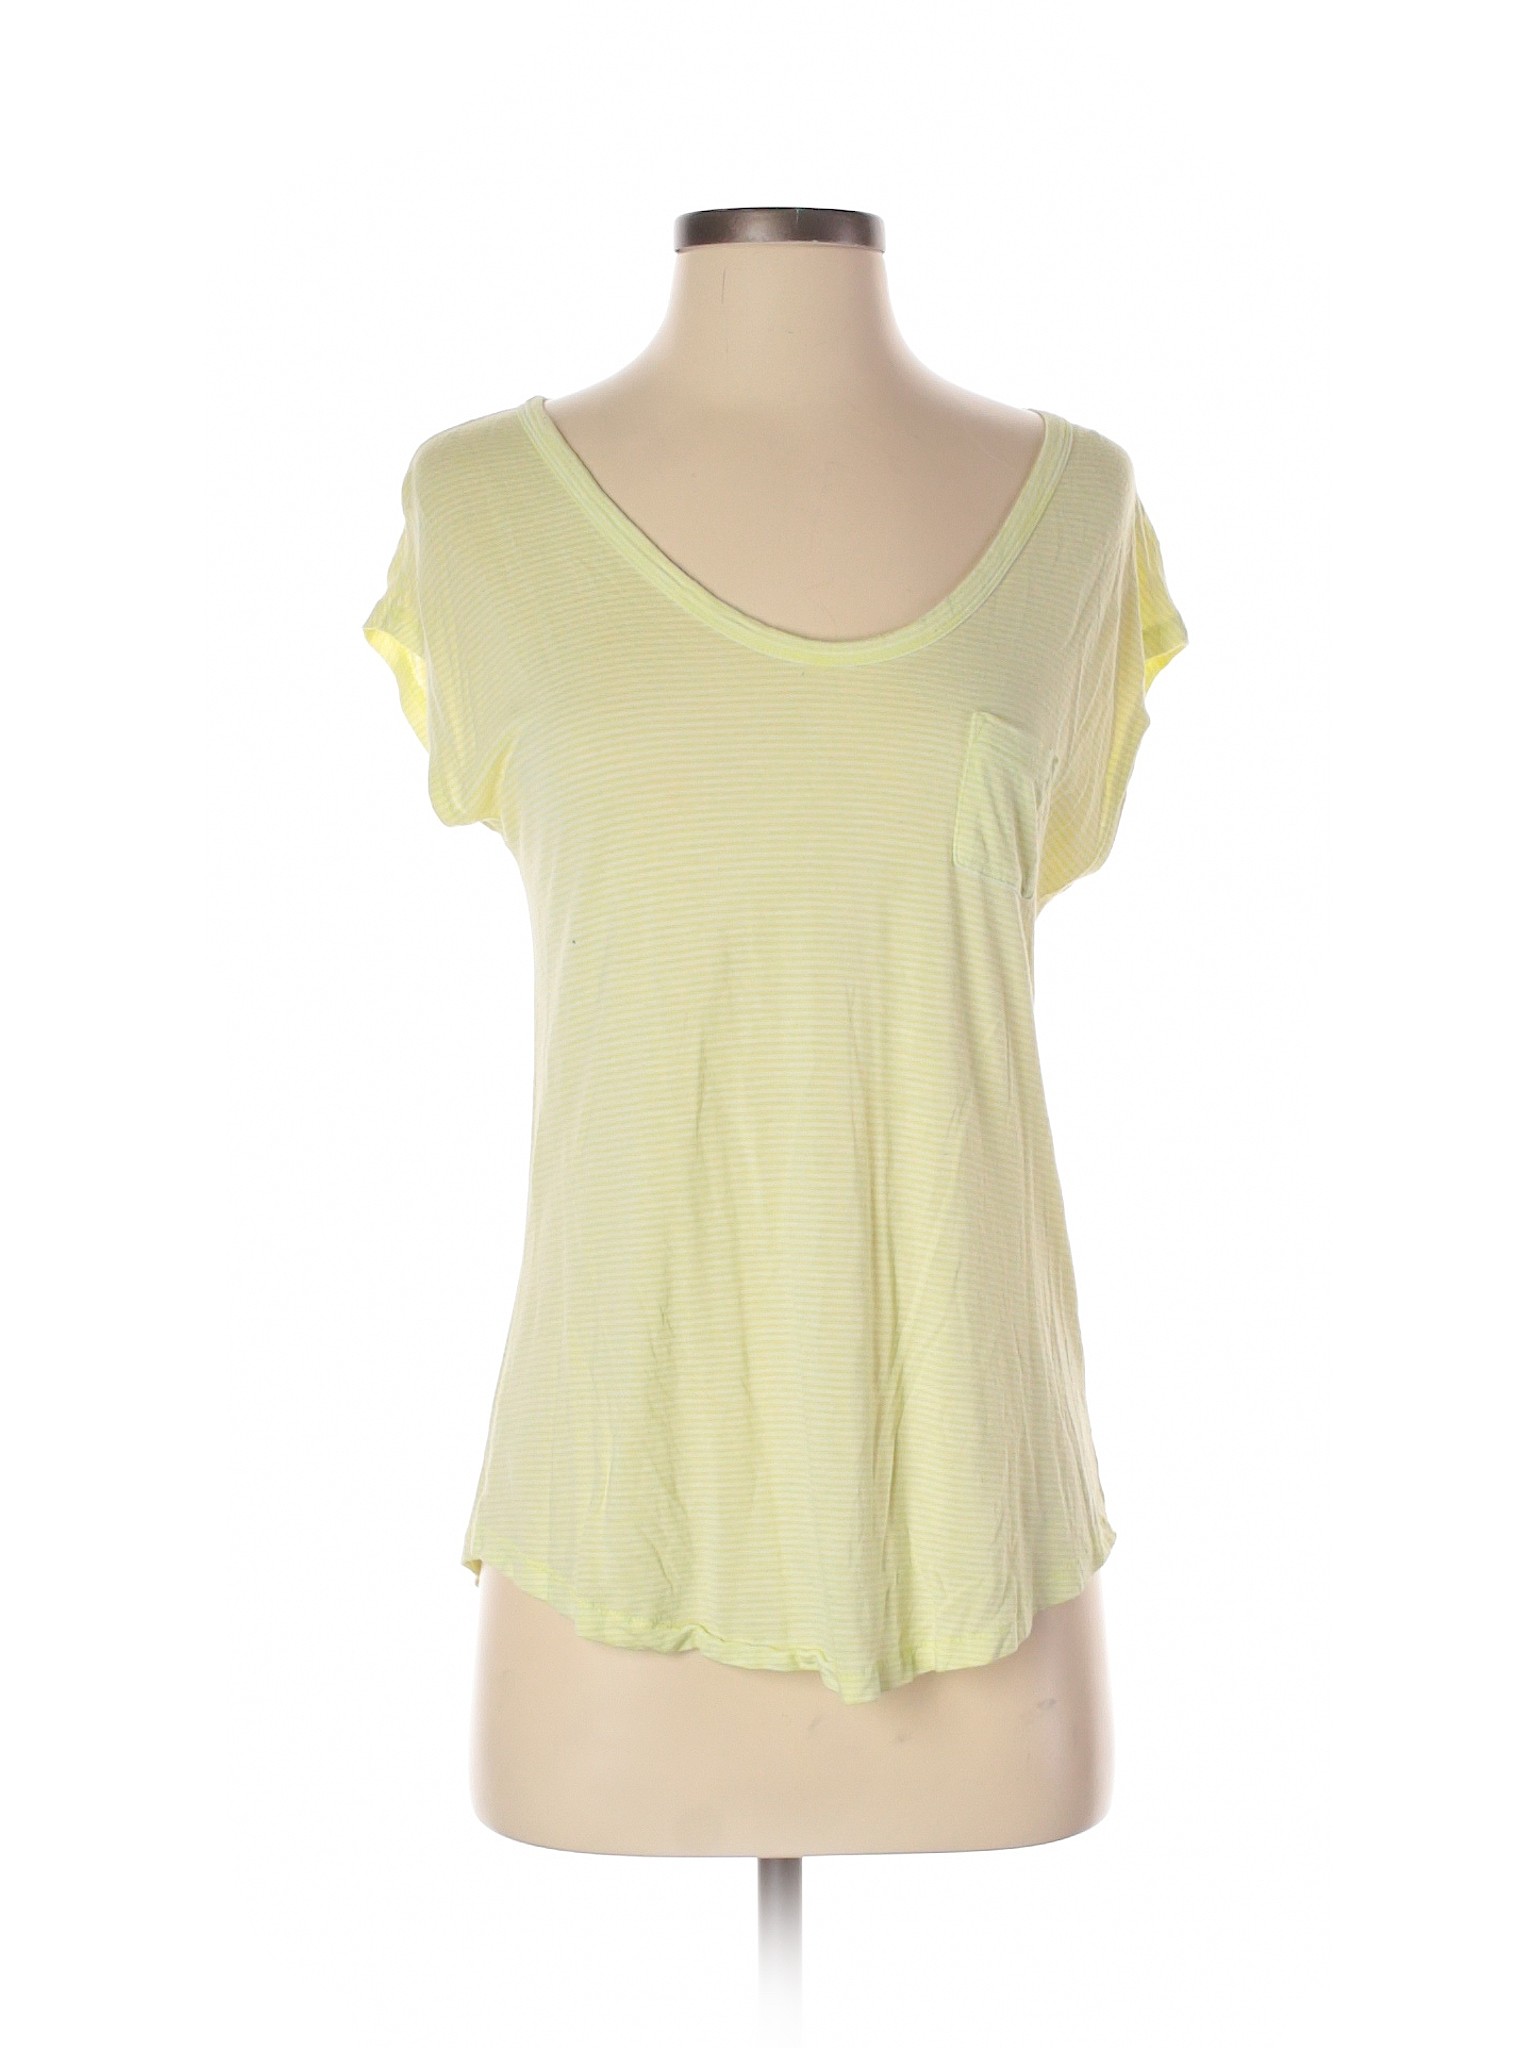 Gap Women Yellow Short Sleeve T-Shirt XS | eBay